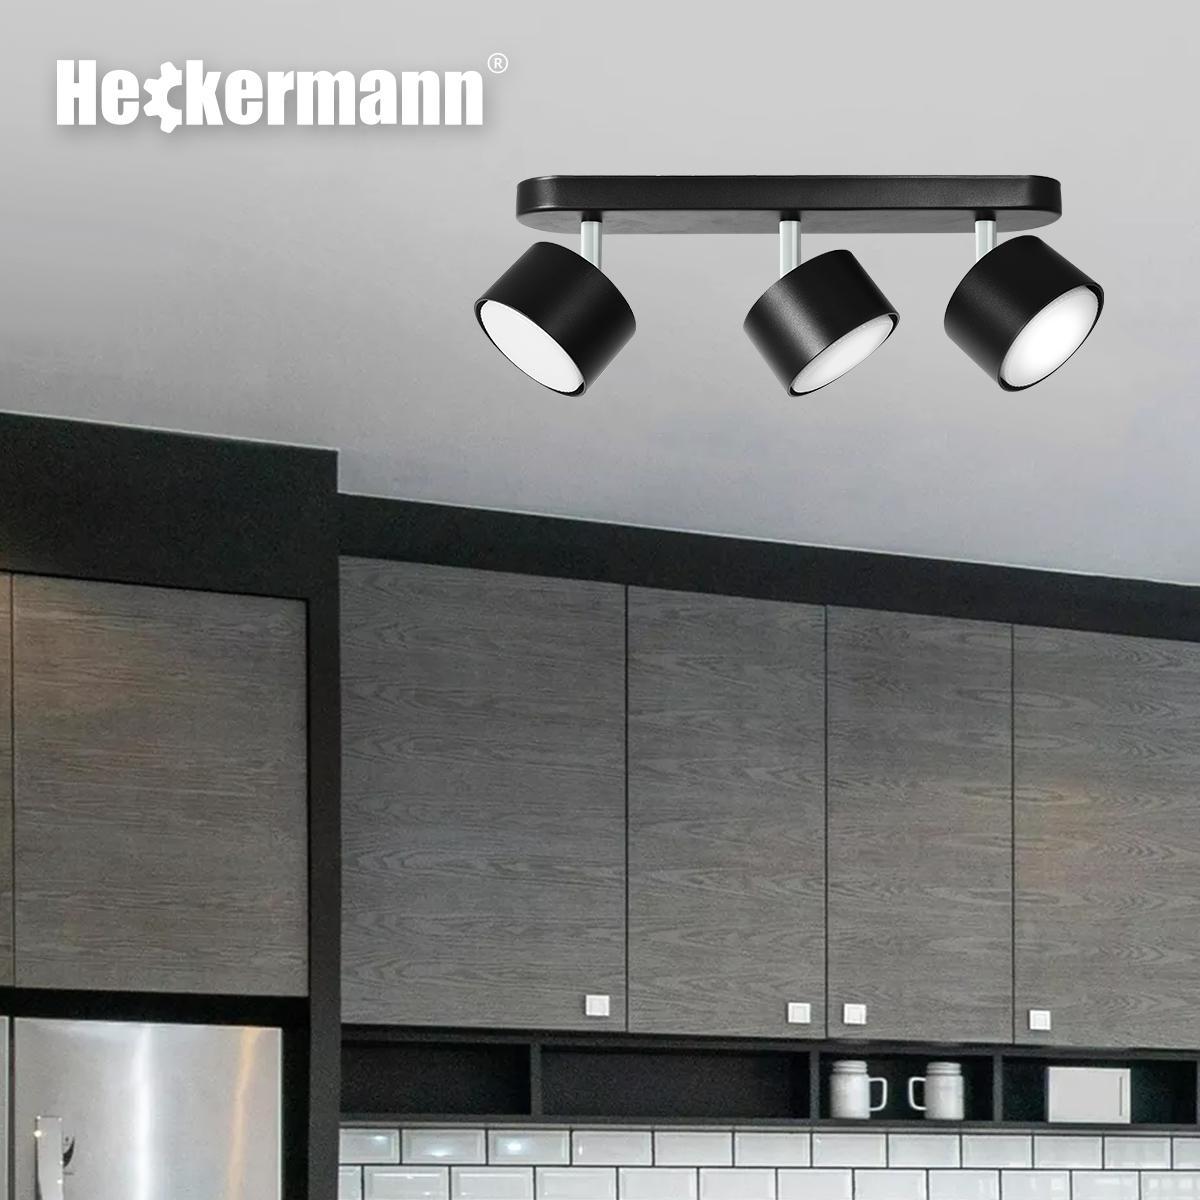 Lampa sufitowa punktowa LED Heckermann 8795316A Czarna 3x głowica + 3x Żarówka LED HGX53 7W Neutral 4 Full Screen